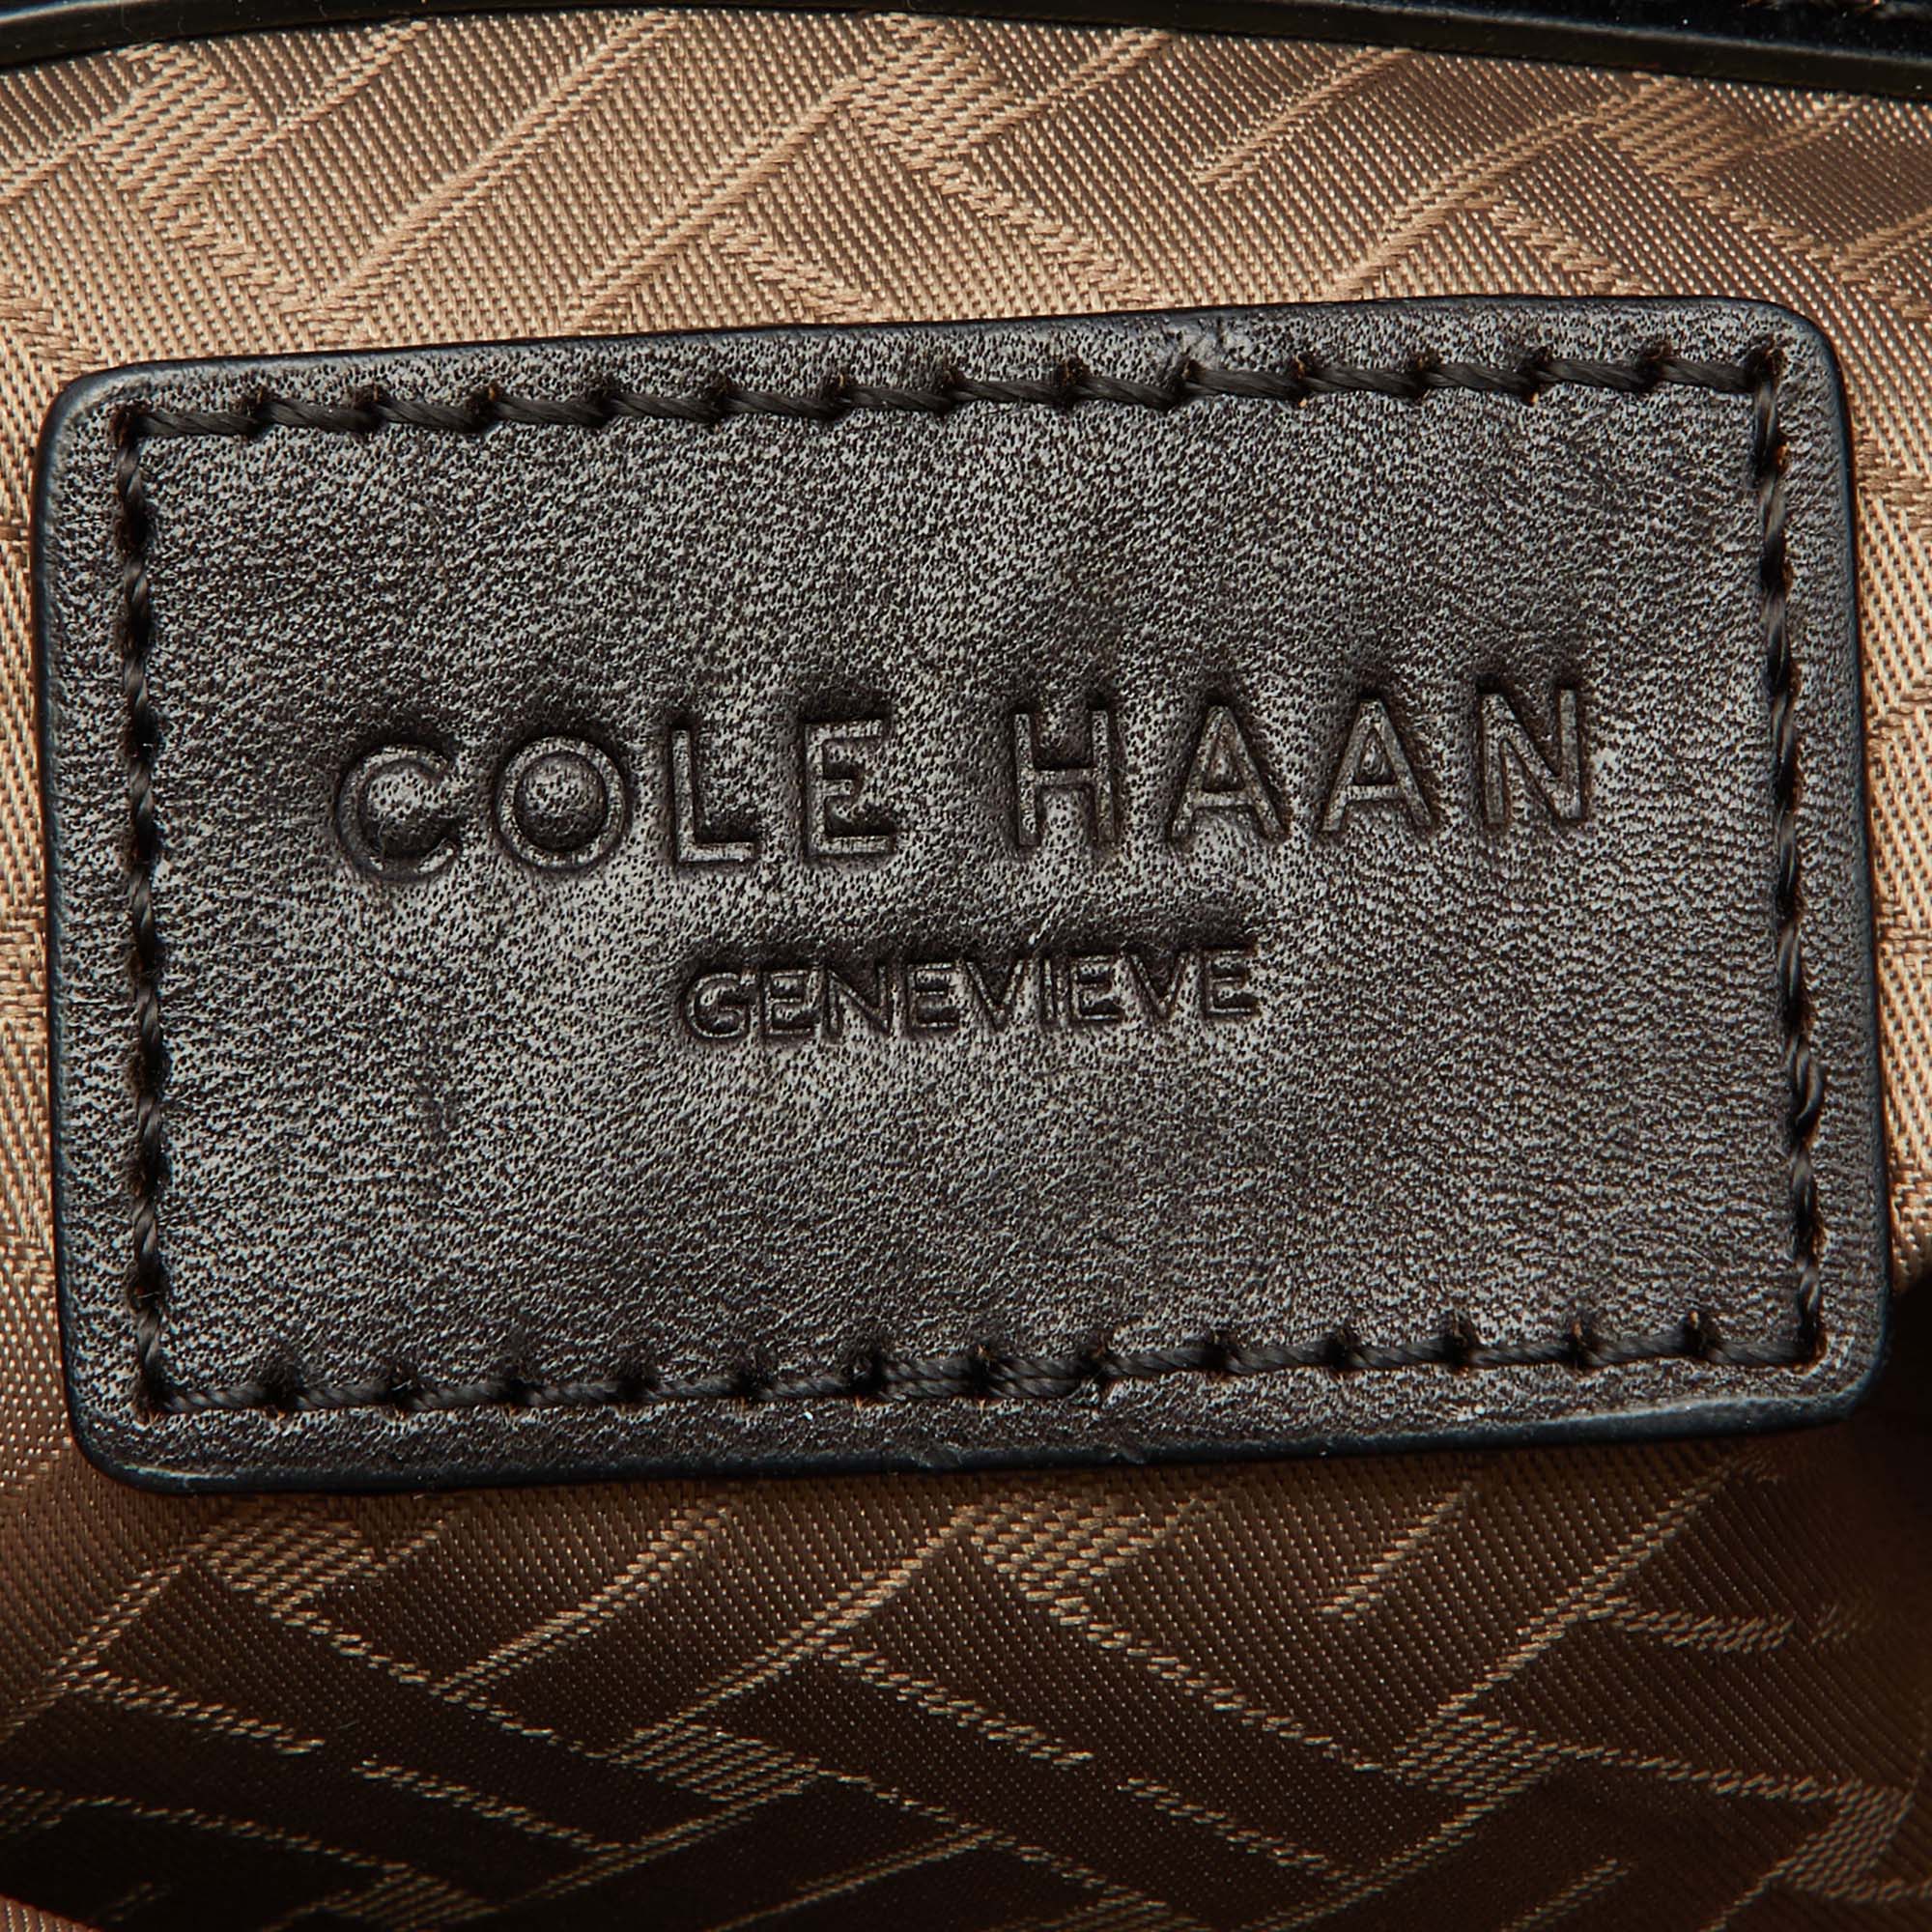 Cole Haan Black Woven Leather Satchel